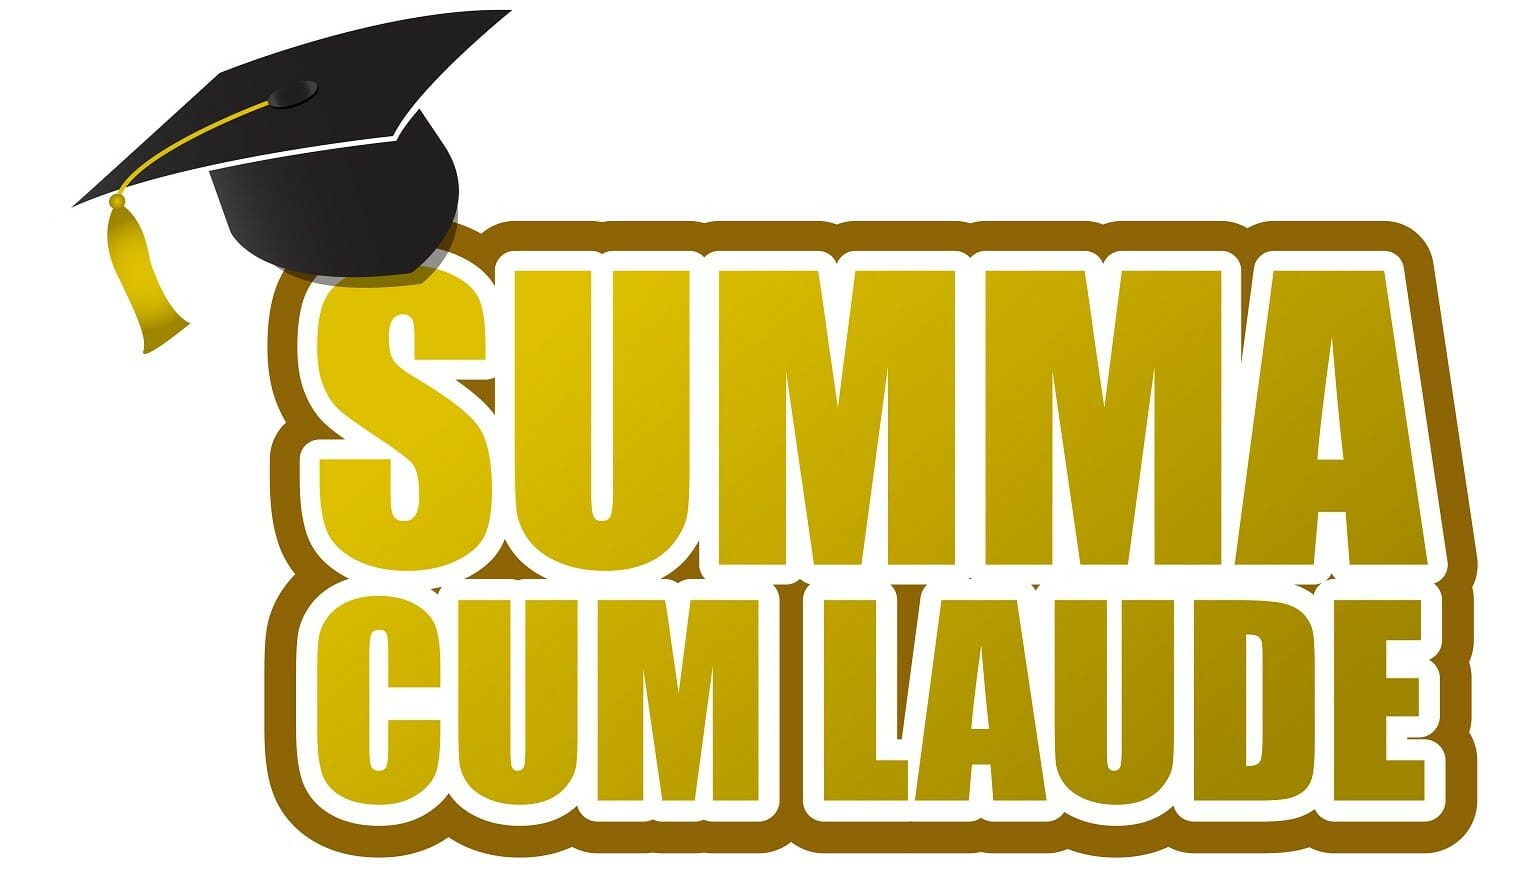 Summa Cum Laude - The Highest Academic Distinction and Recognition